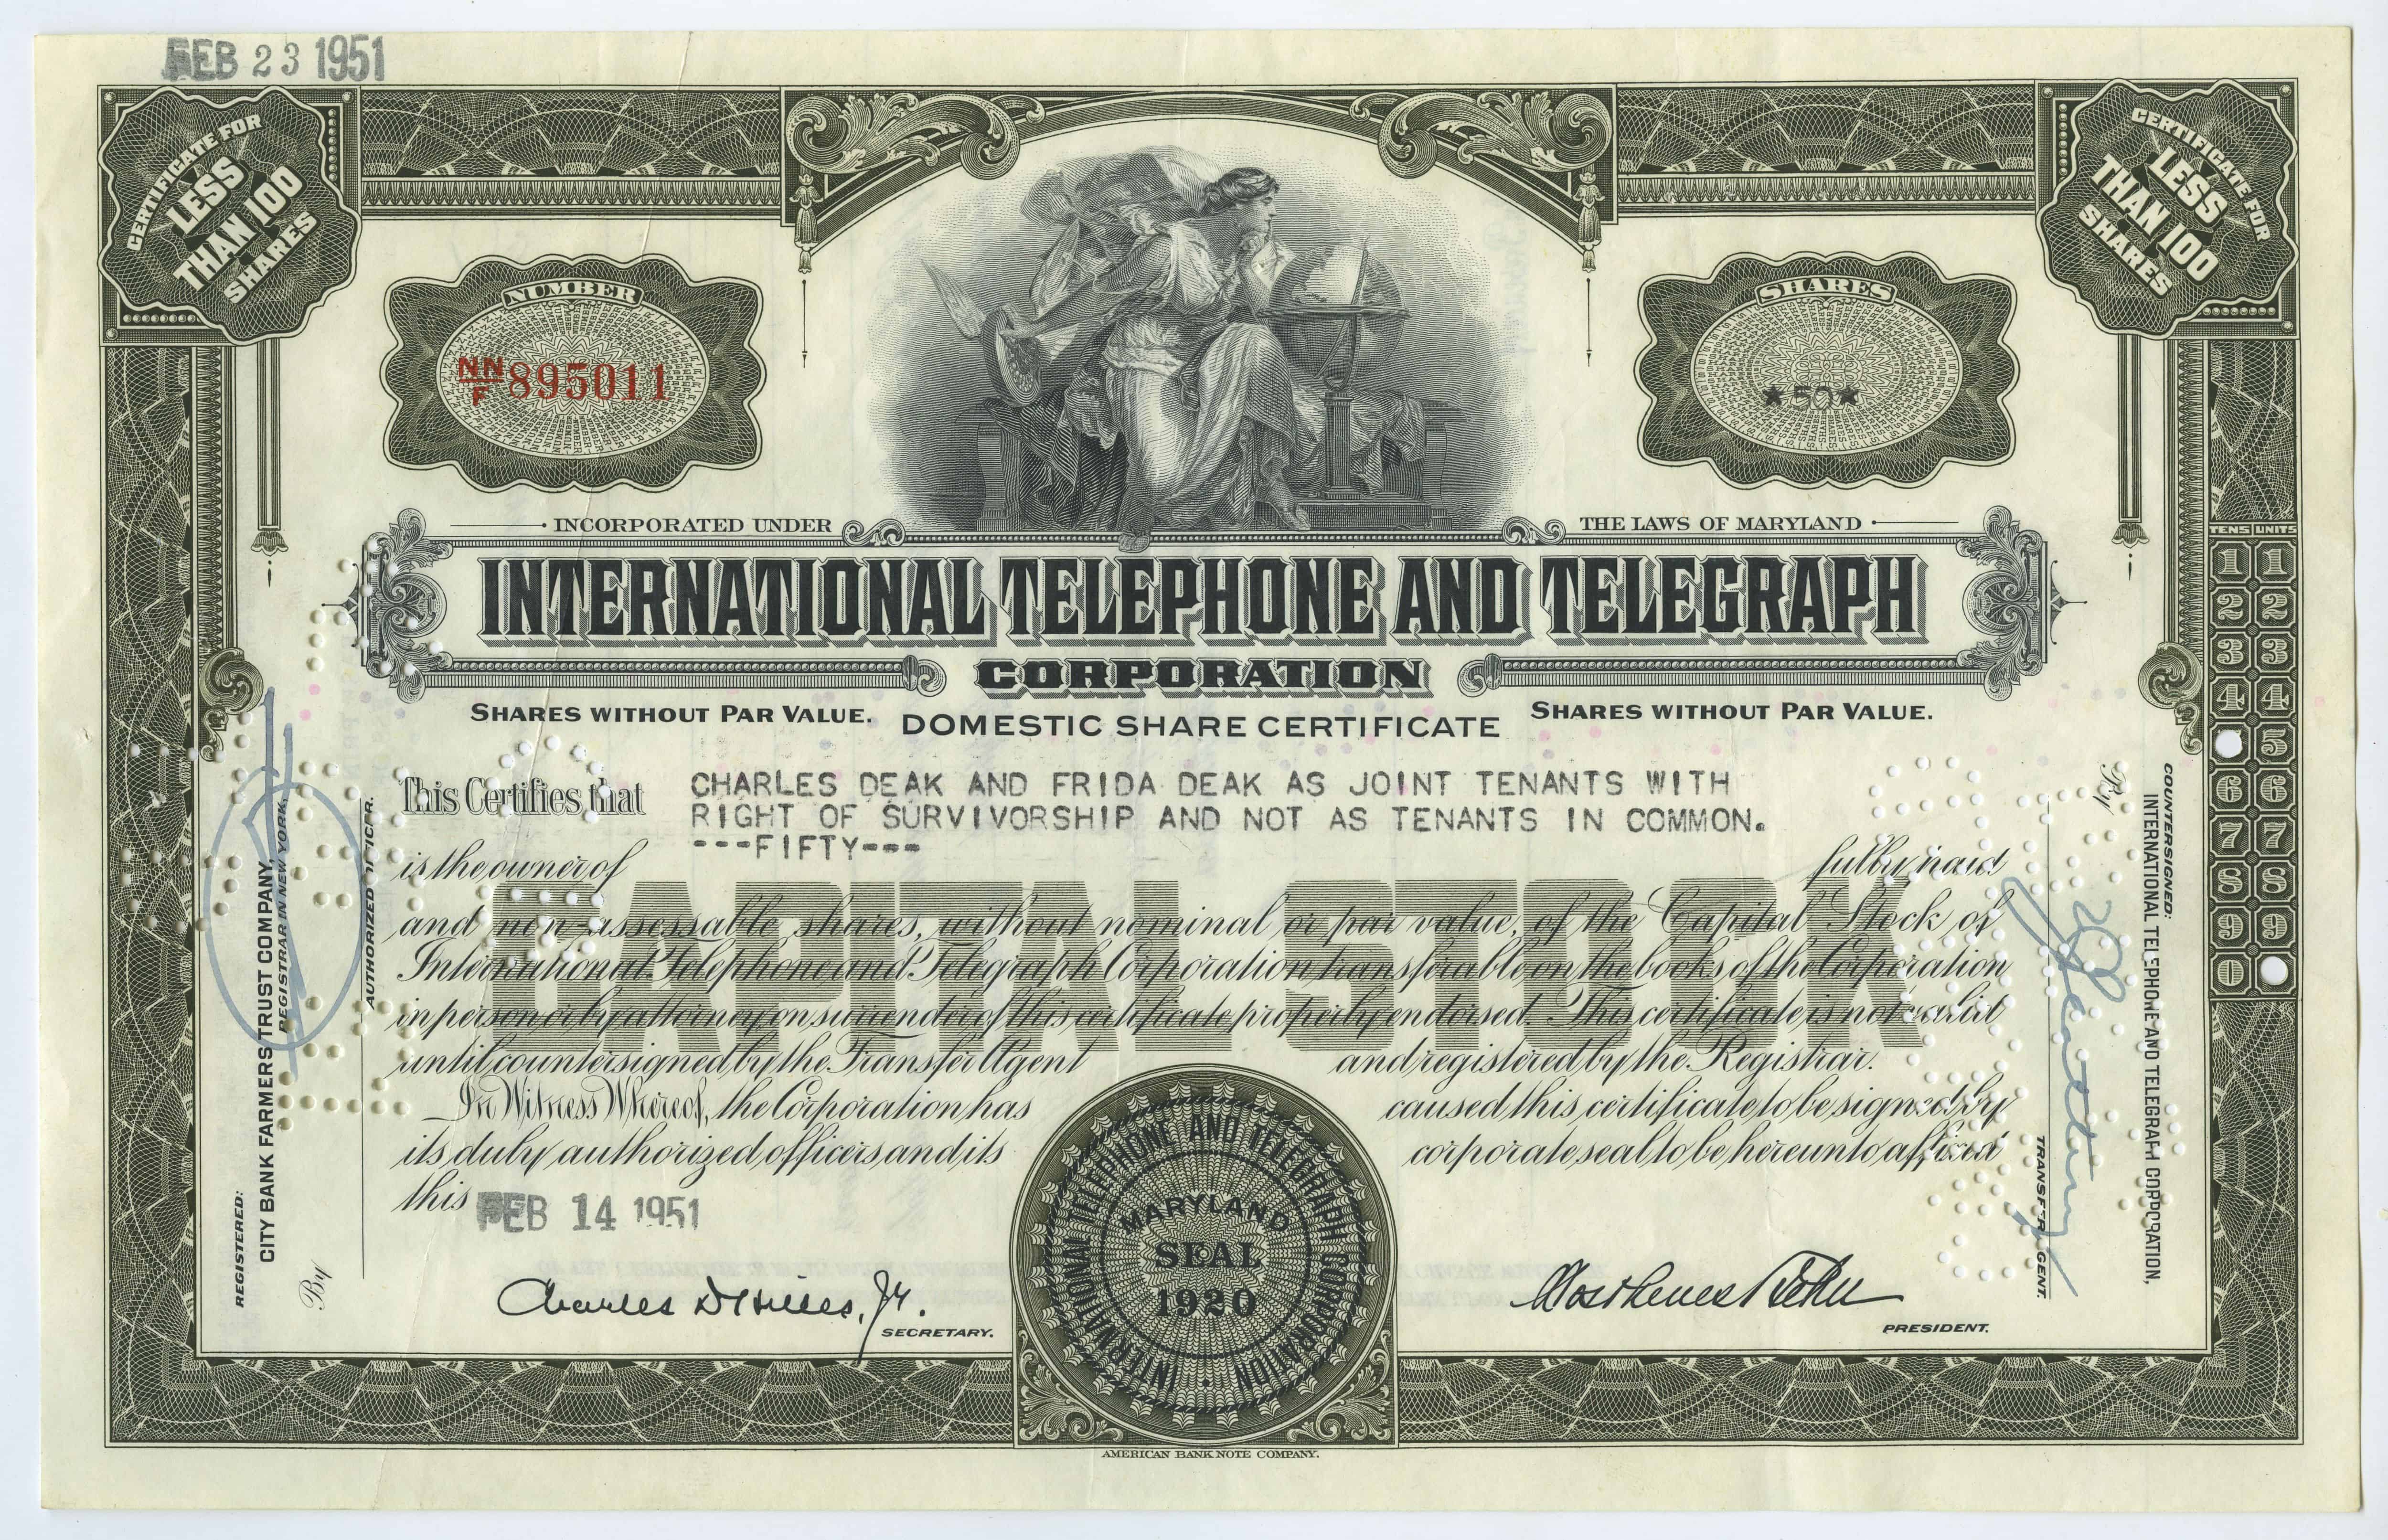 50 akcji spółki International Telephone and Telegraph Corporation z dnia 14 lutego 1951 roku